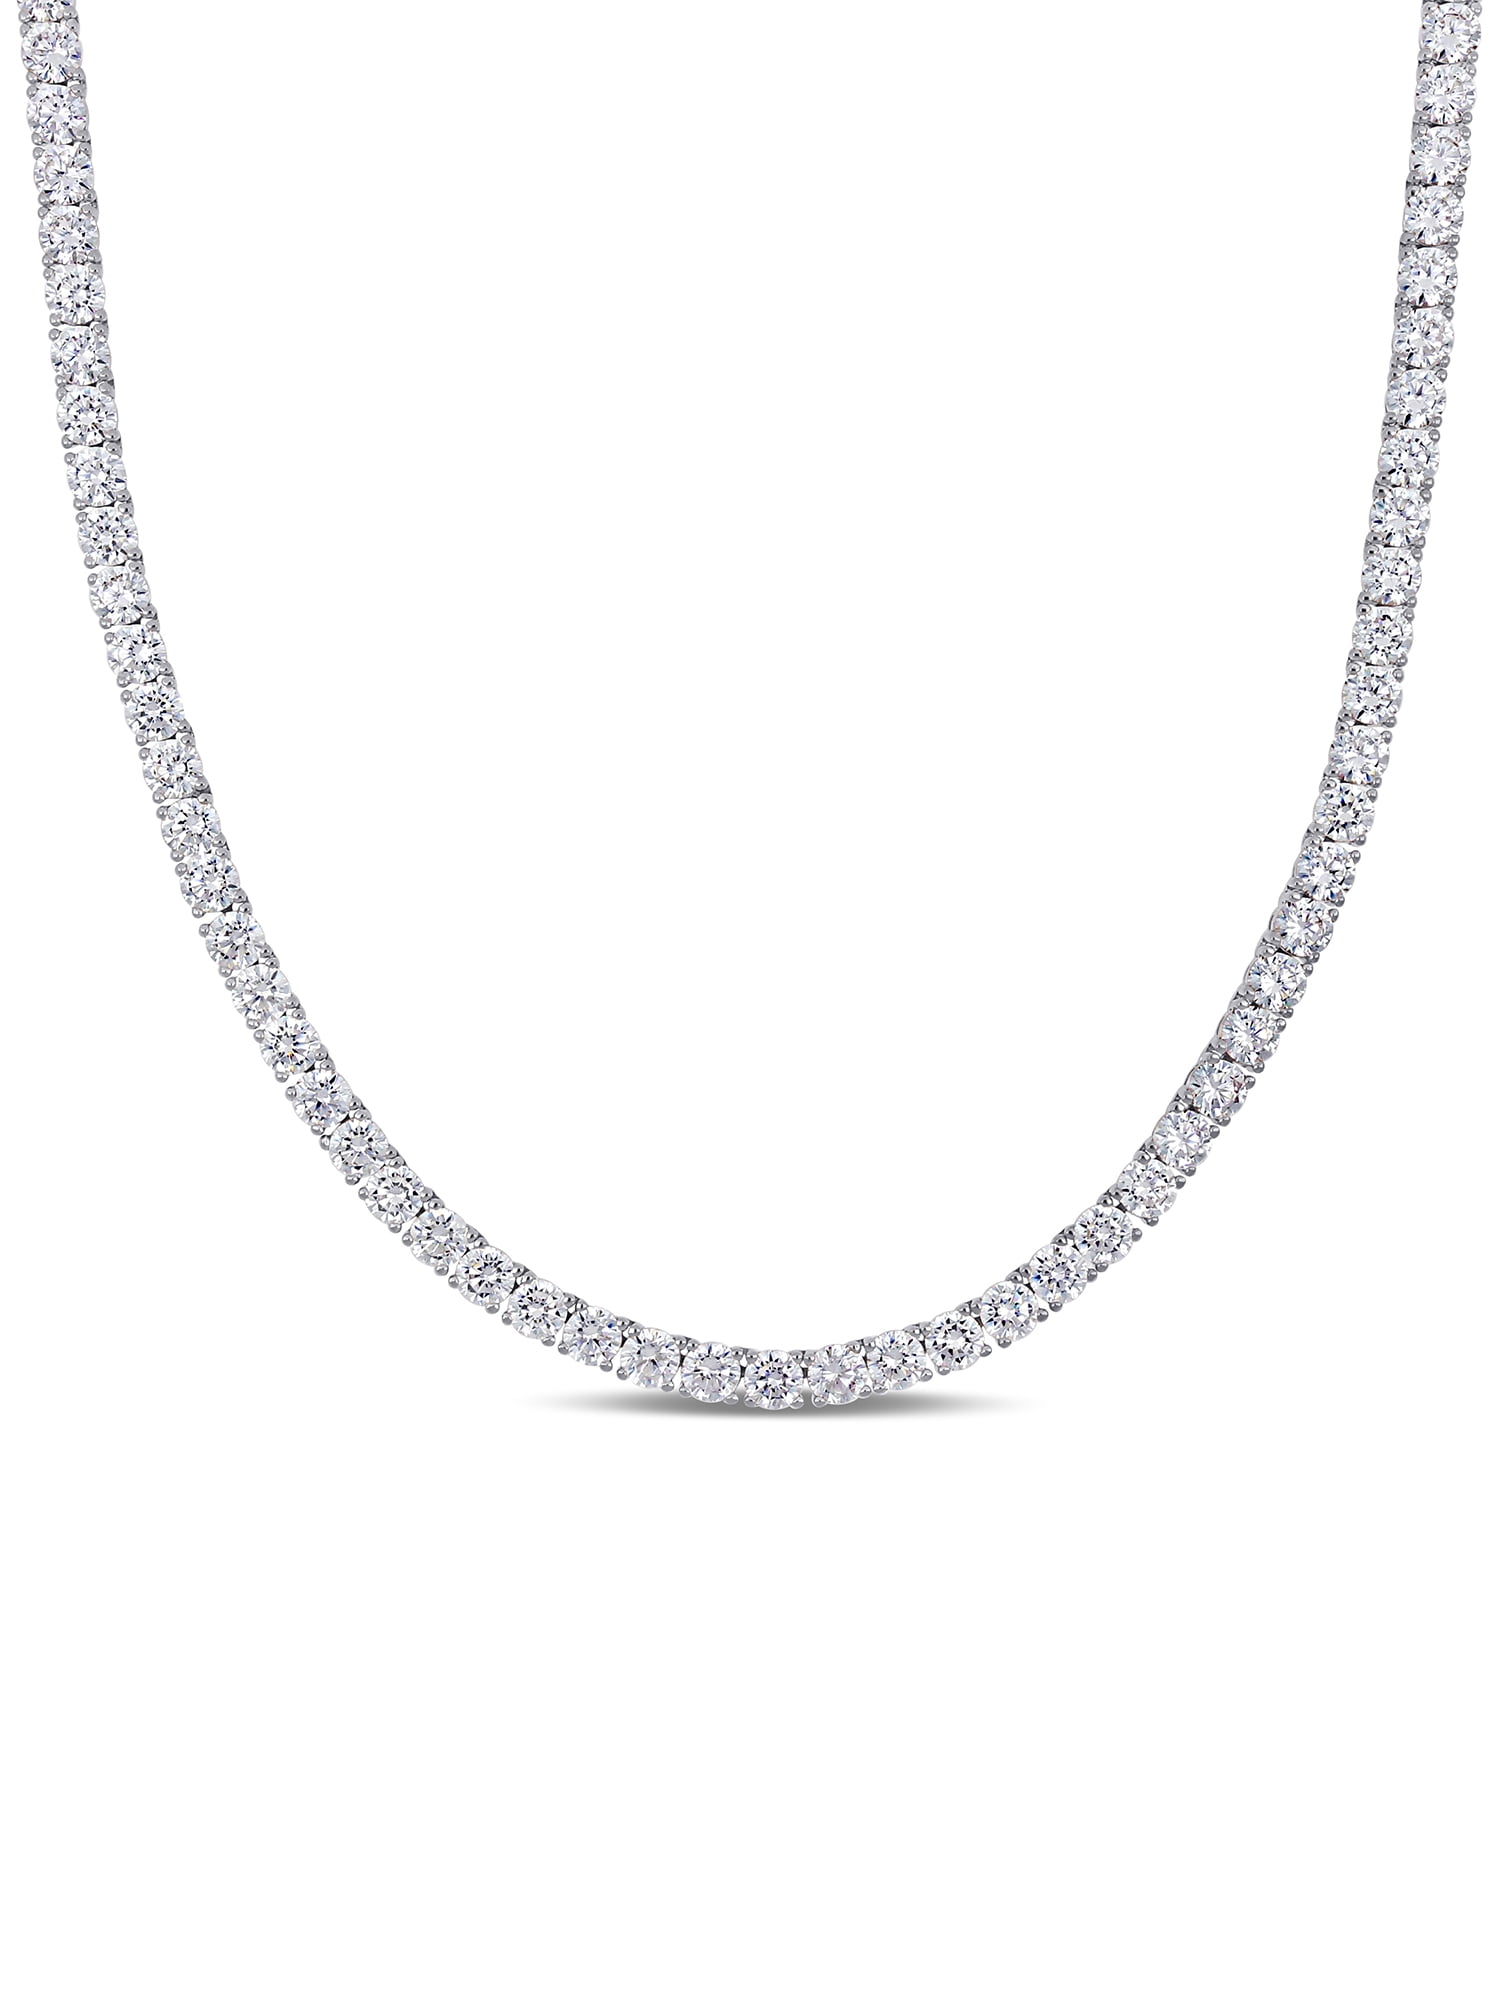 New Design Moon & Sun 925 Silver Necklace Crystal CZ Choker Chain Bride Jewelry 